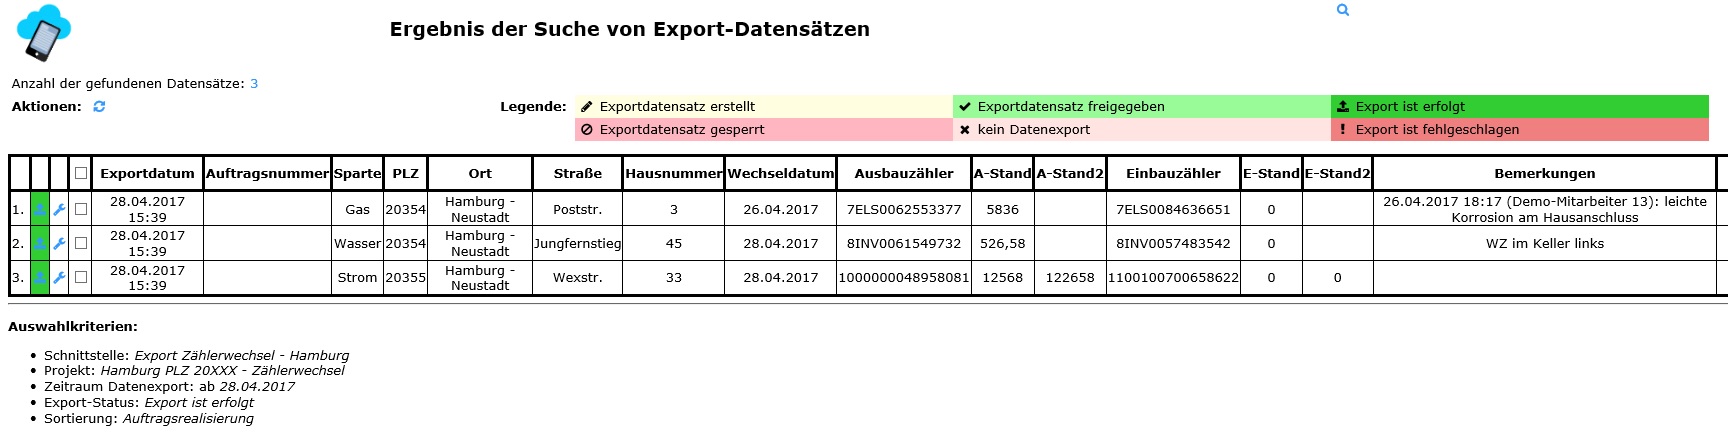 Übersicht Export-Datensätze nach Export